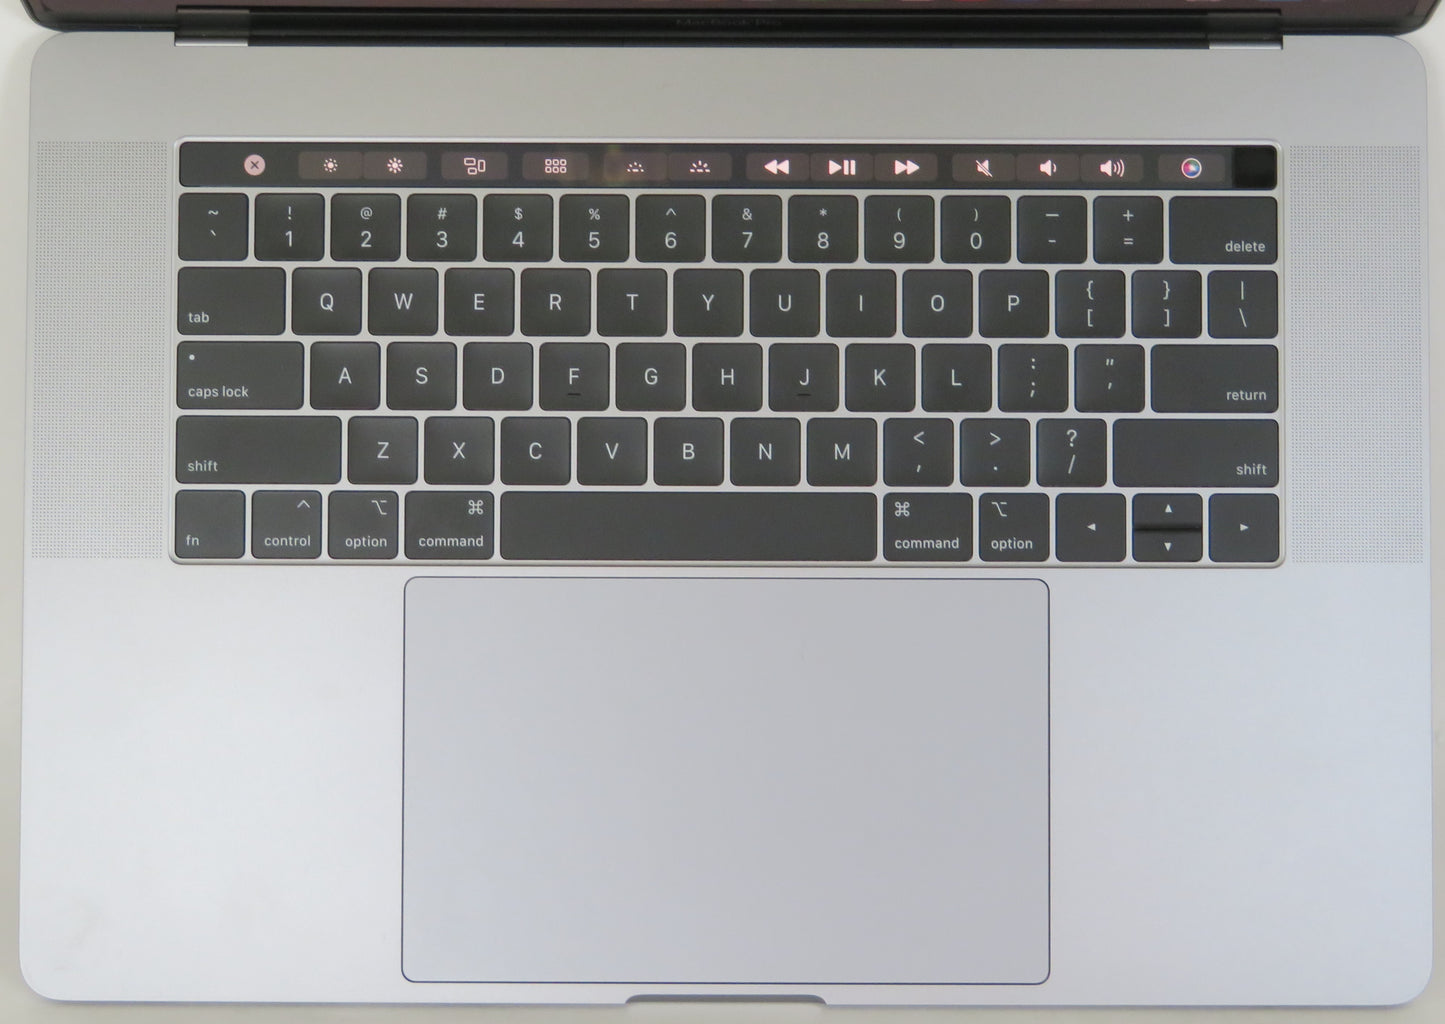 Apple Macbook Pro 2019 A1990 15in Retina 555X i7-9750H@2.4GHz 16GB 512GB Sonoma